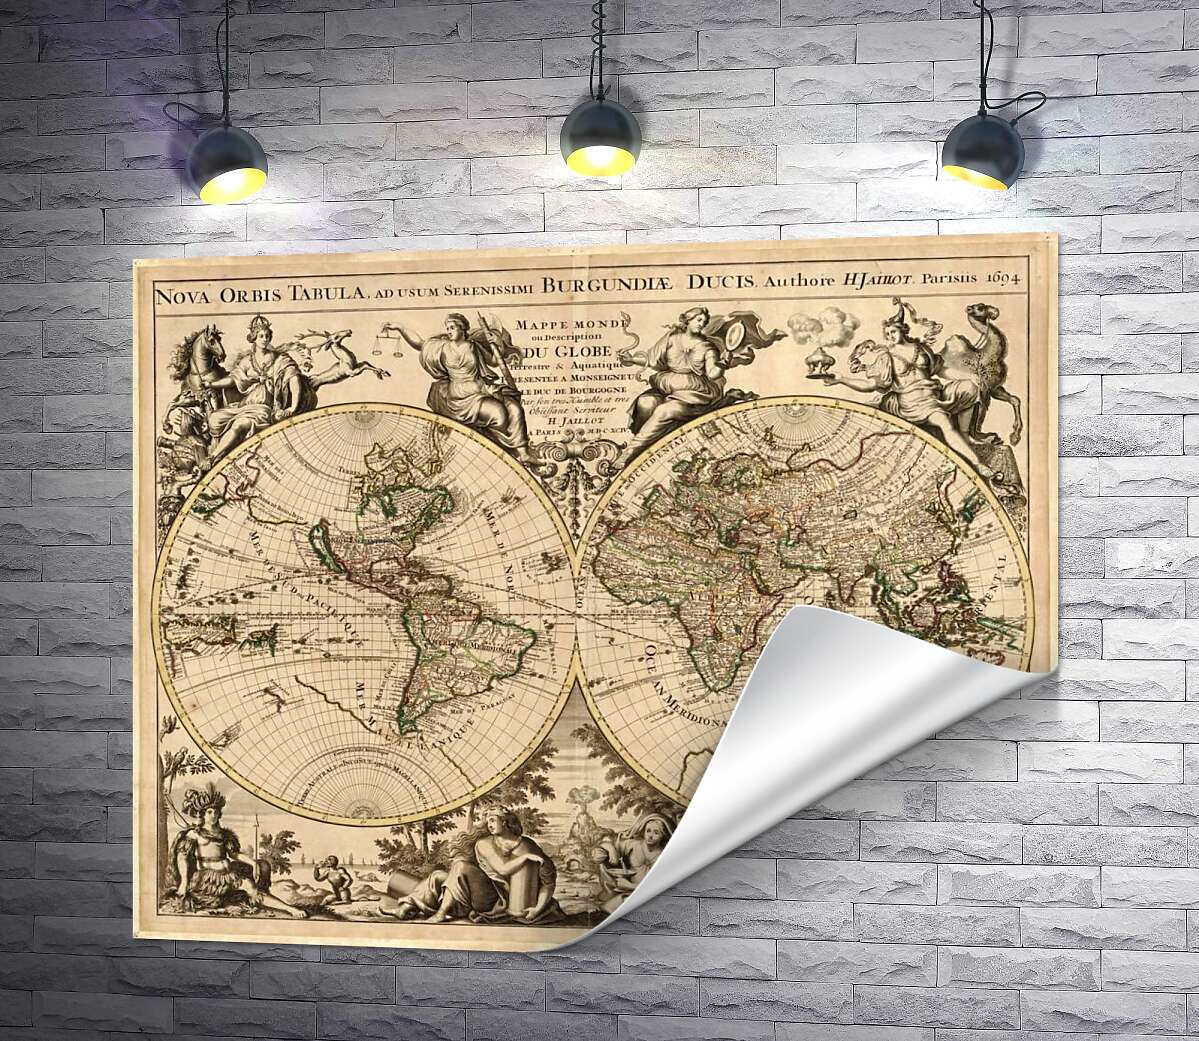 друк Карта півкуль Землі 1694 року, авторства французького картографа Юбера Жайо (Hubert Jaillot)